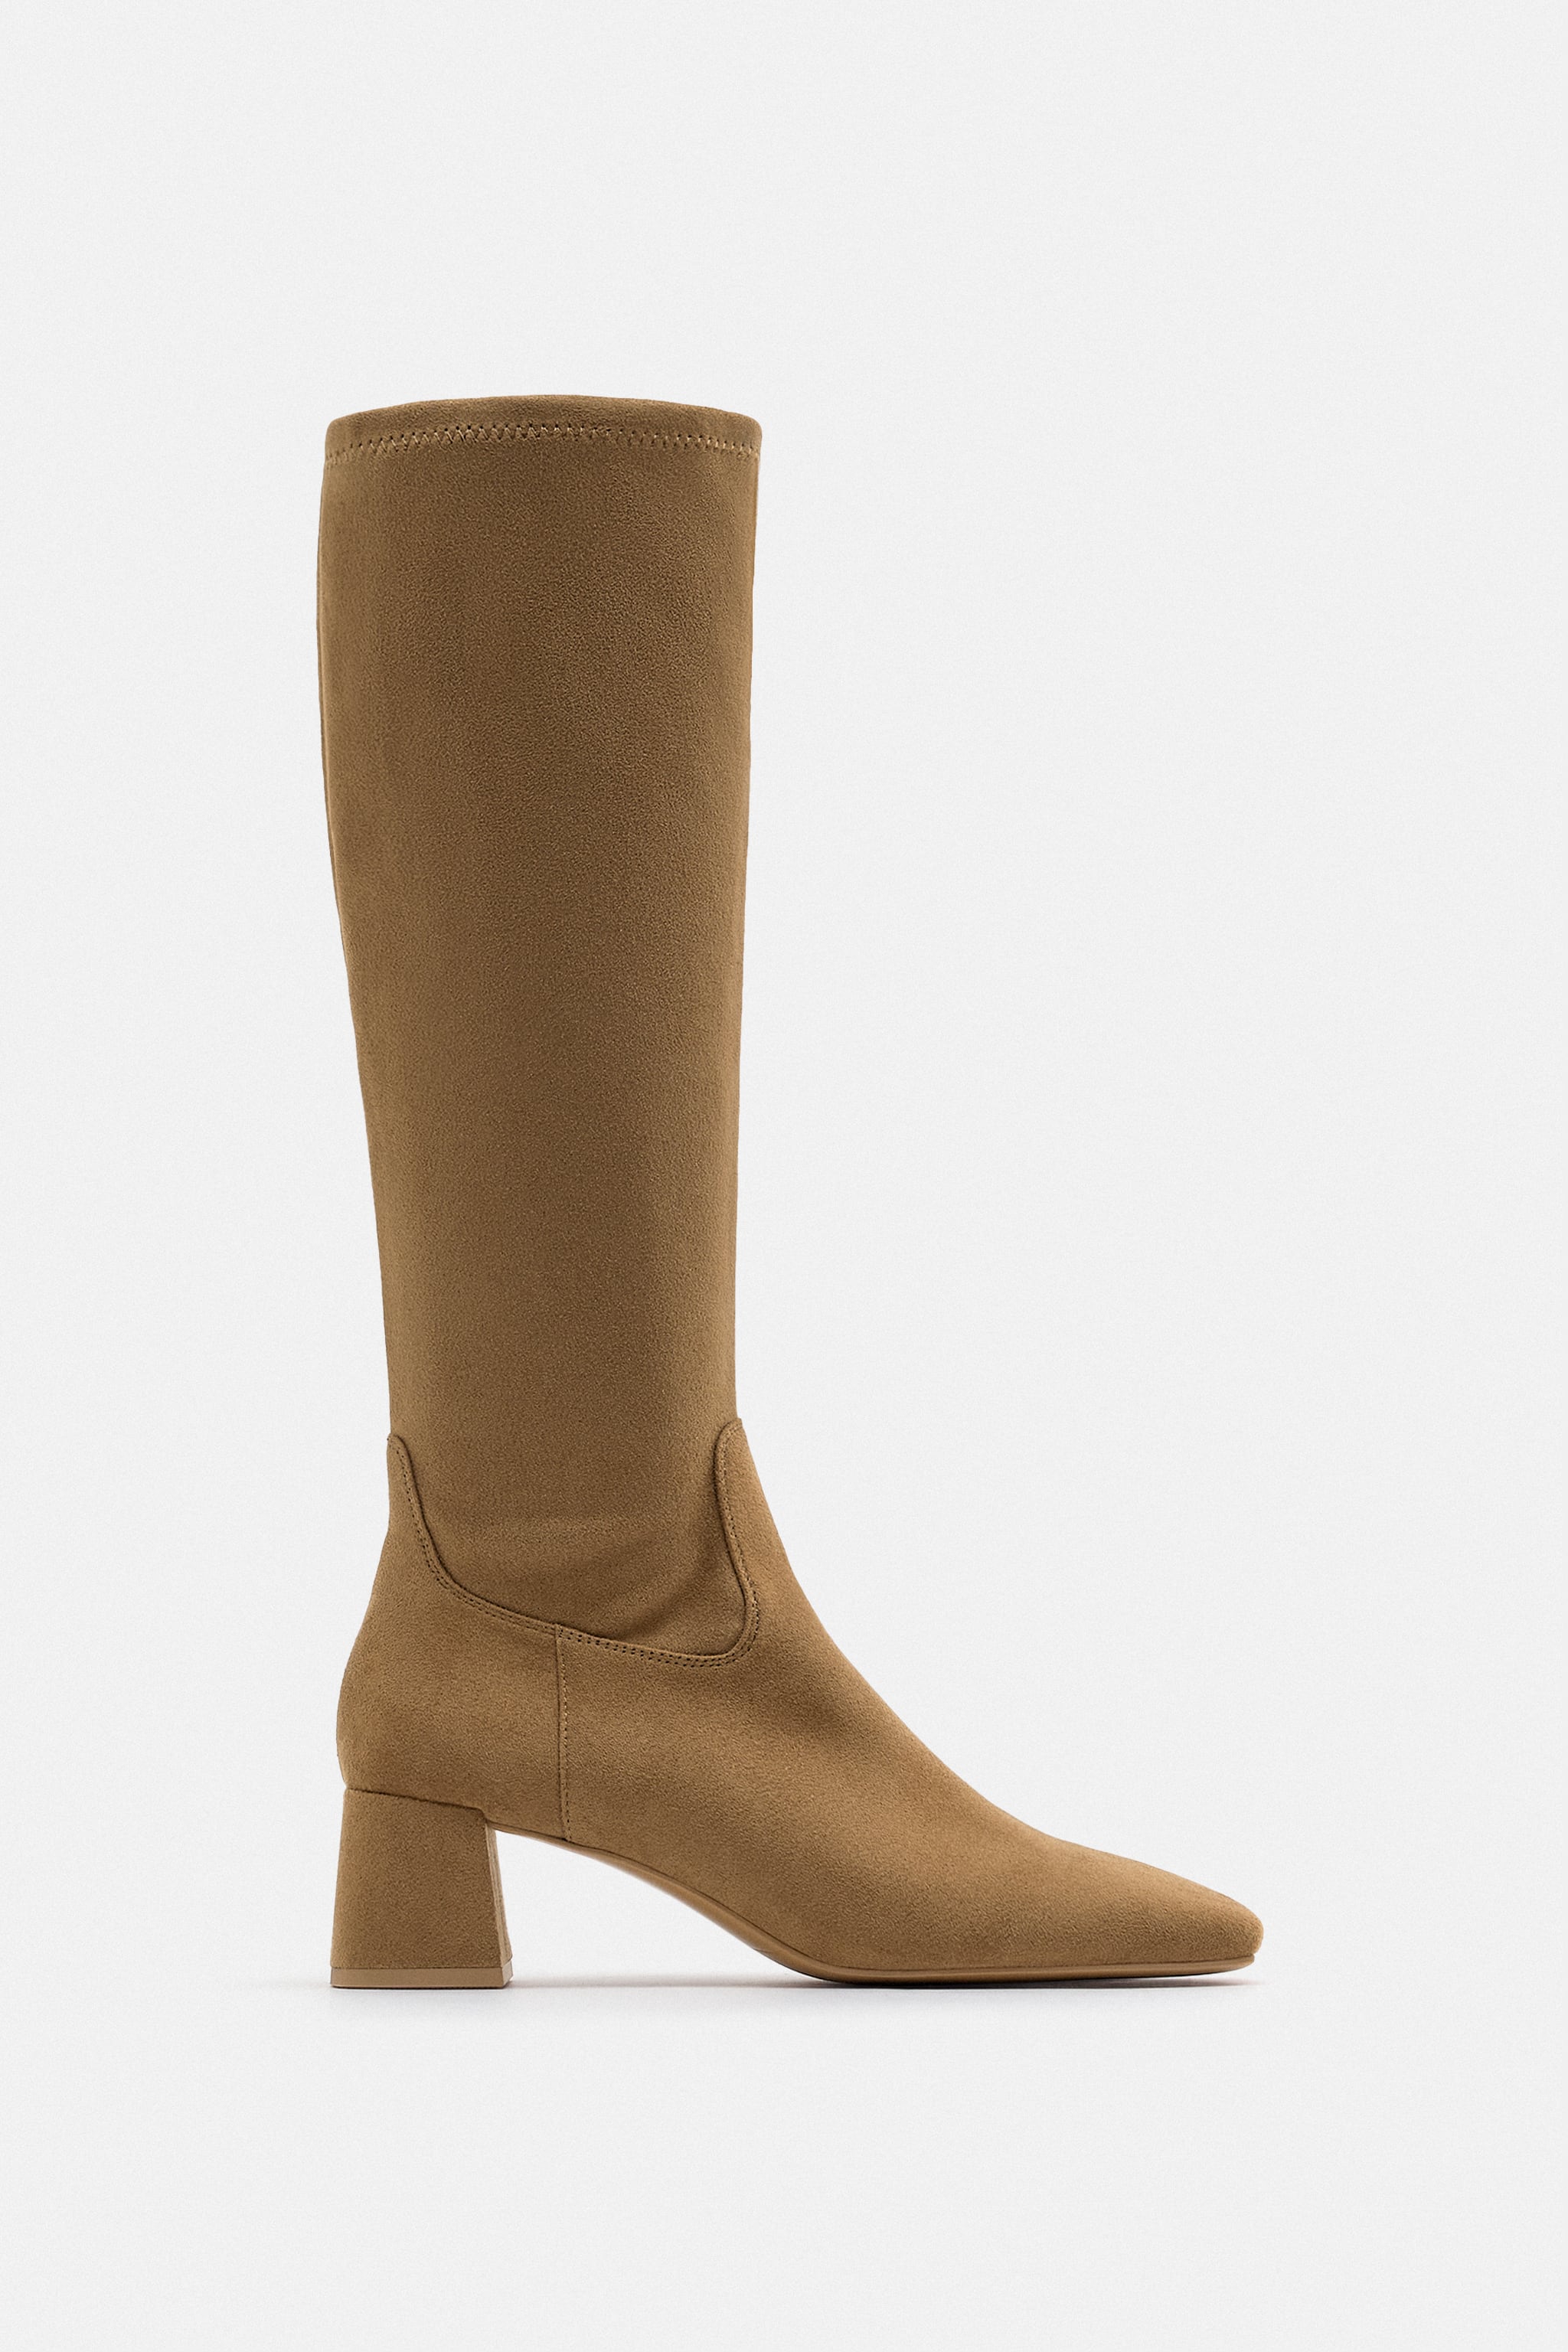 Zara + Excessive-Heel Stretch Knee-Excessive Boots